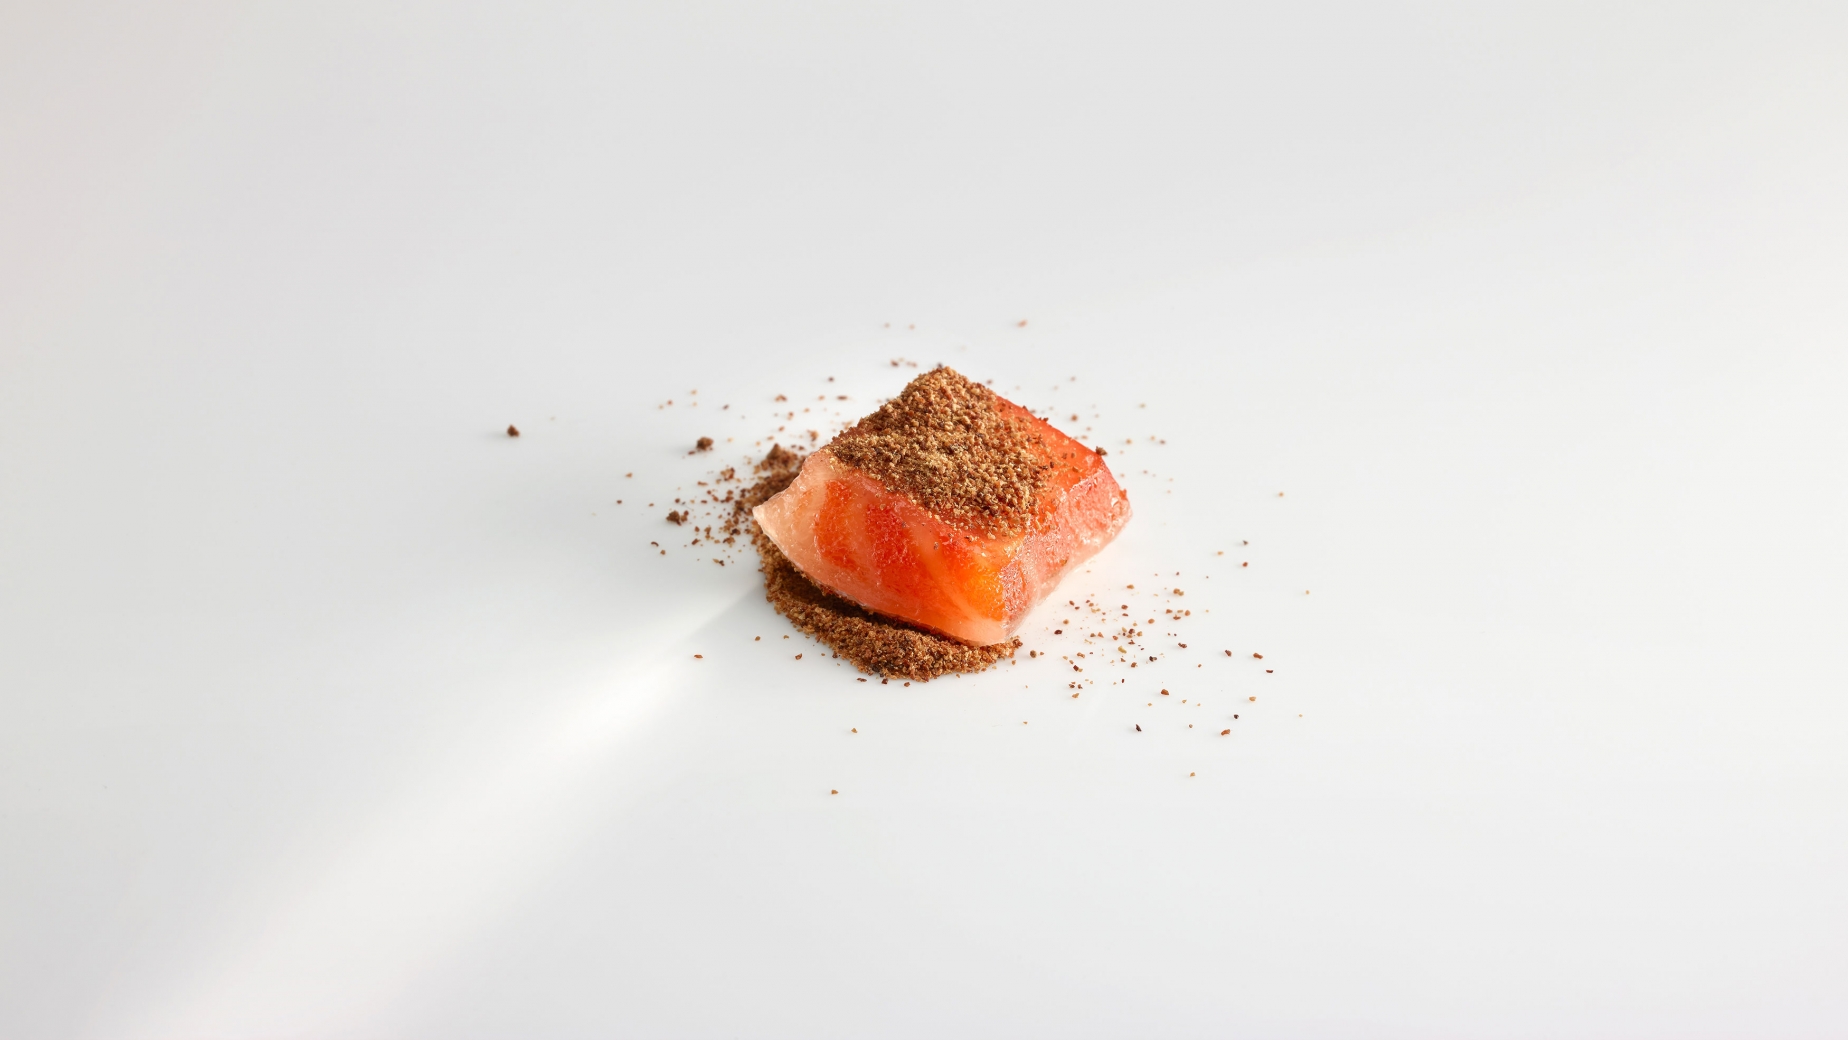 House-cured salmon bonbon.
PHOTO: José Luis López de Zubiría/ Mugaritz 